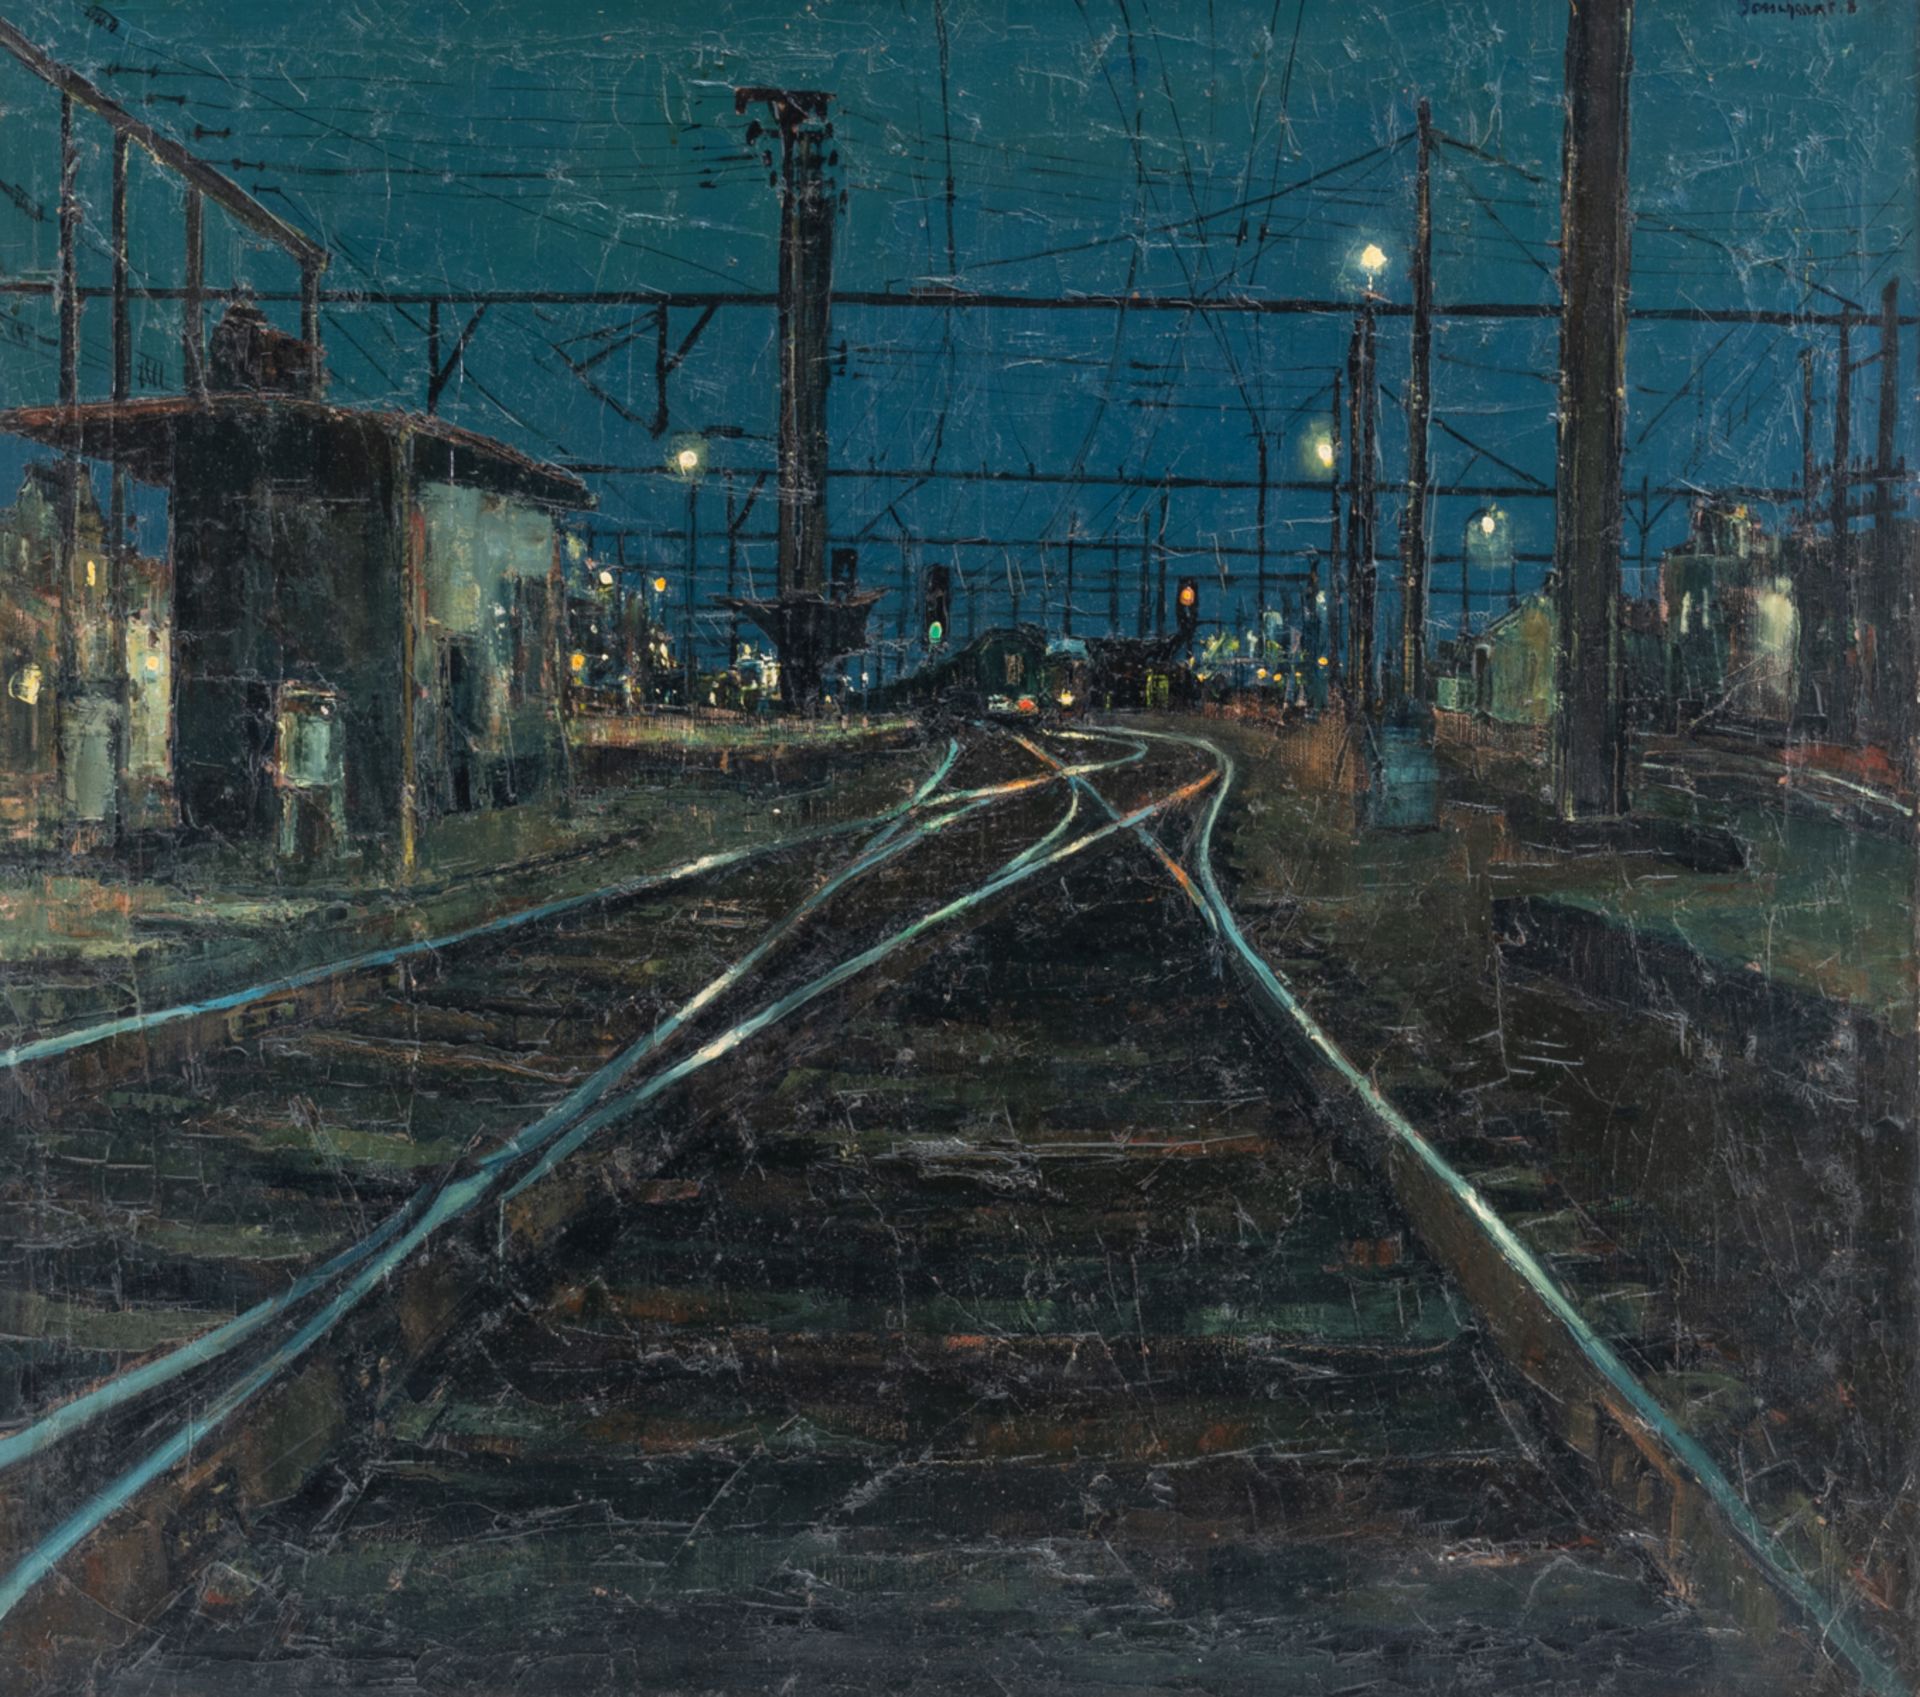 Bosschaert B., view of Bettendorf railway station - Luxemburg, oil on canvas, 80,5 x 90 cm Is possib